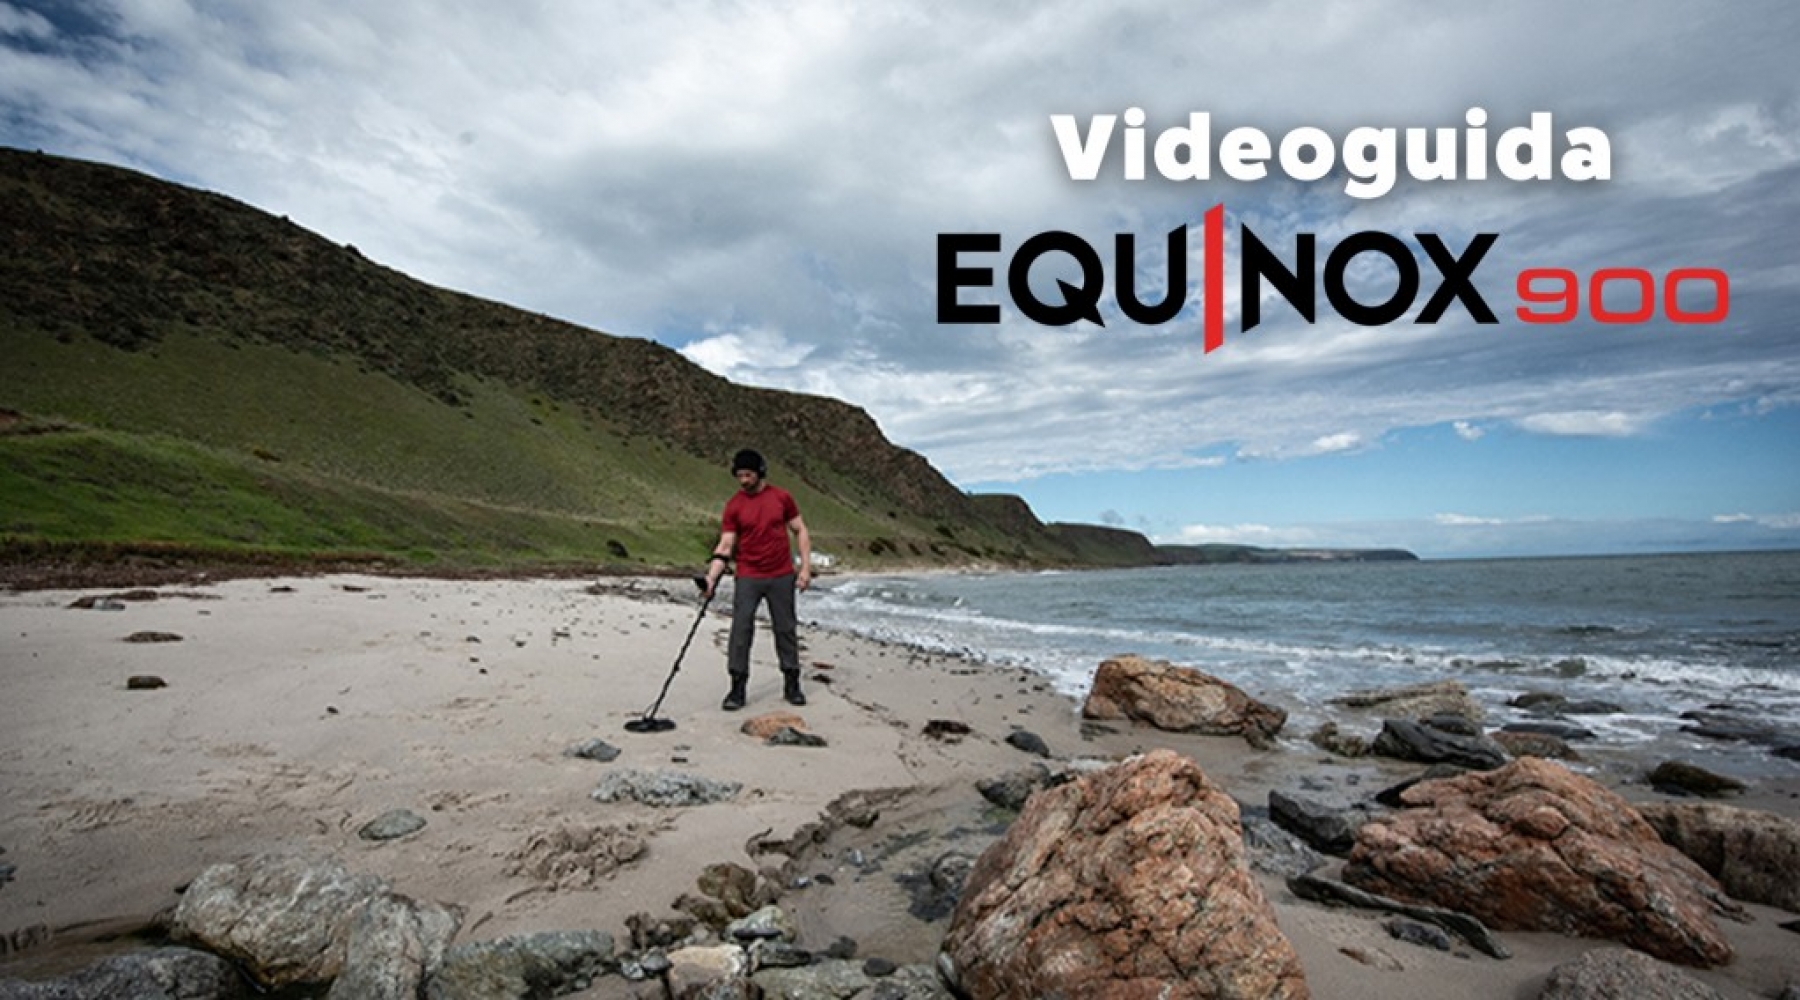 Equinox 900 Video Guide: Infinite Freedom in Exploration